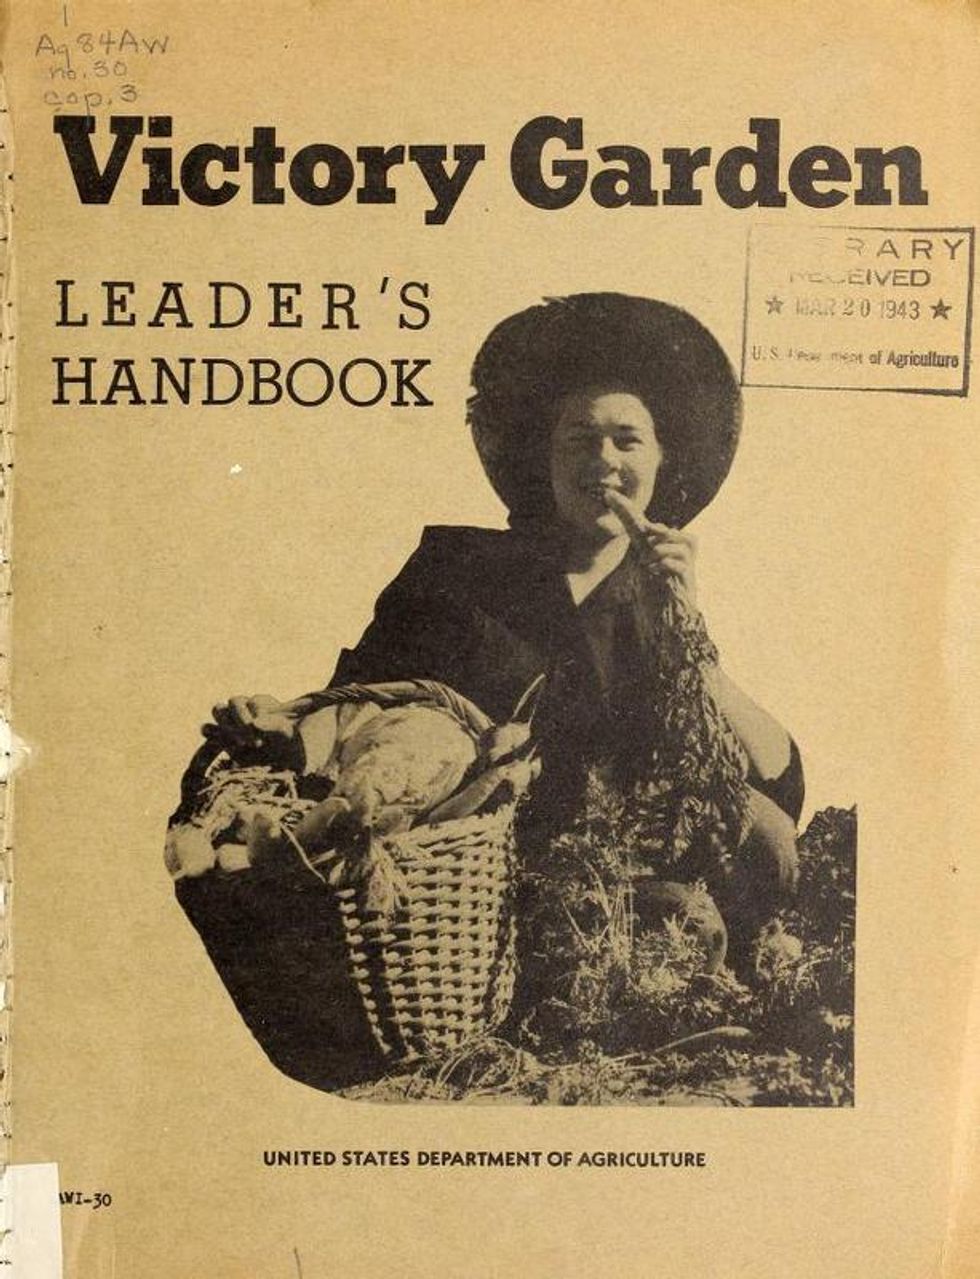 Victory Garden handbook